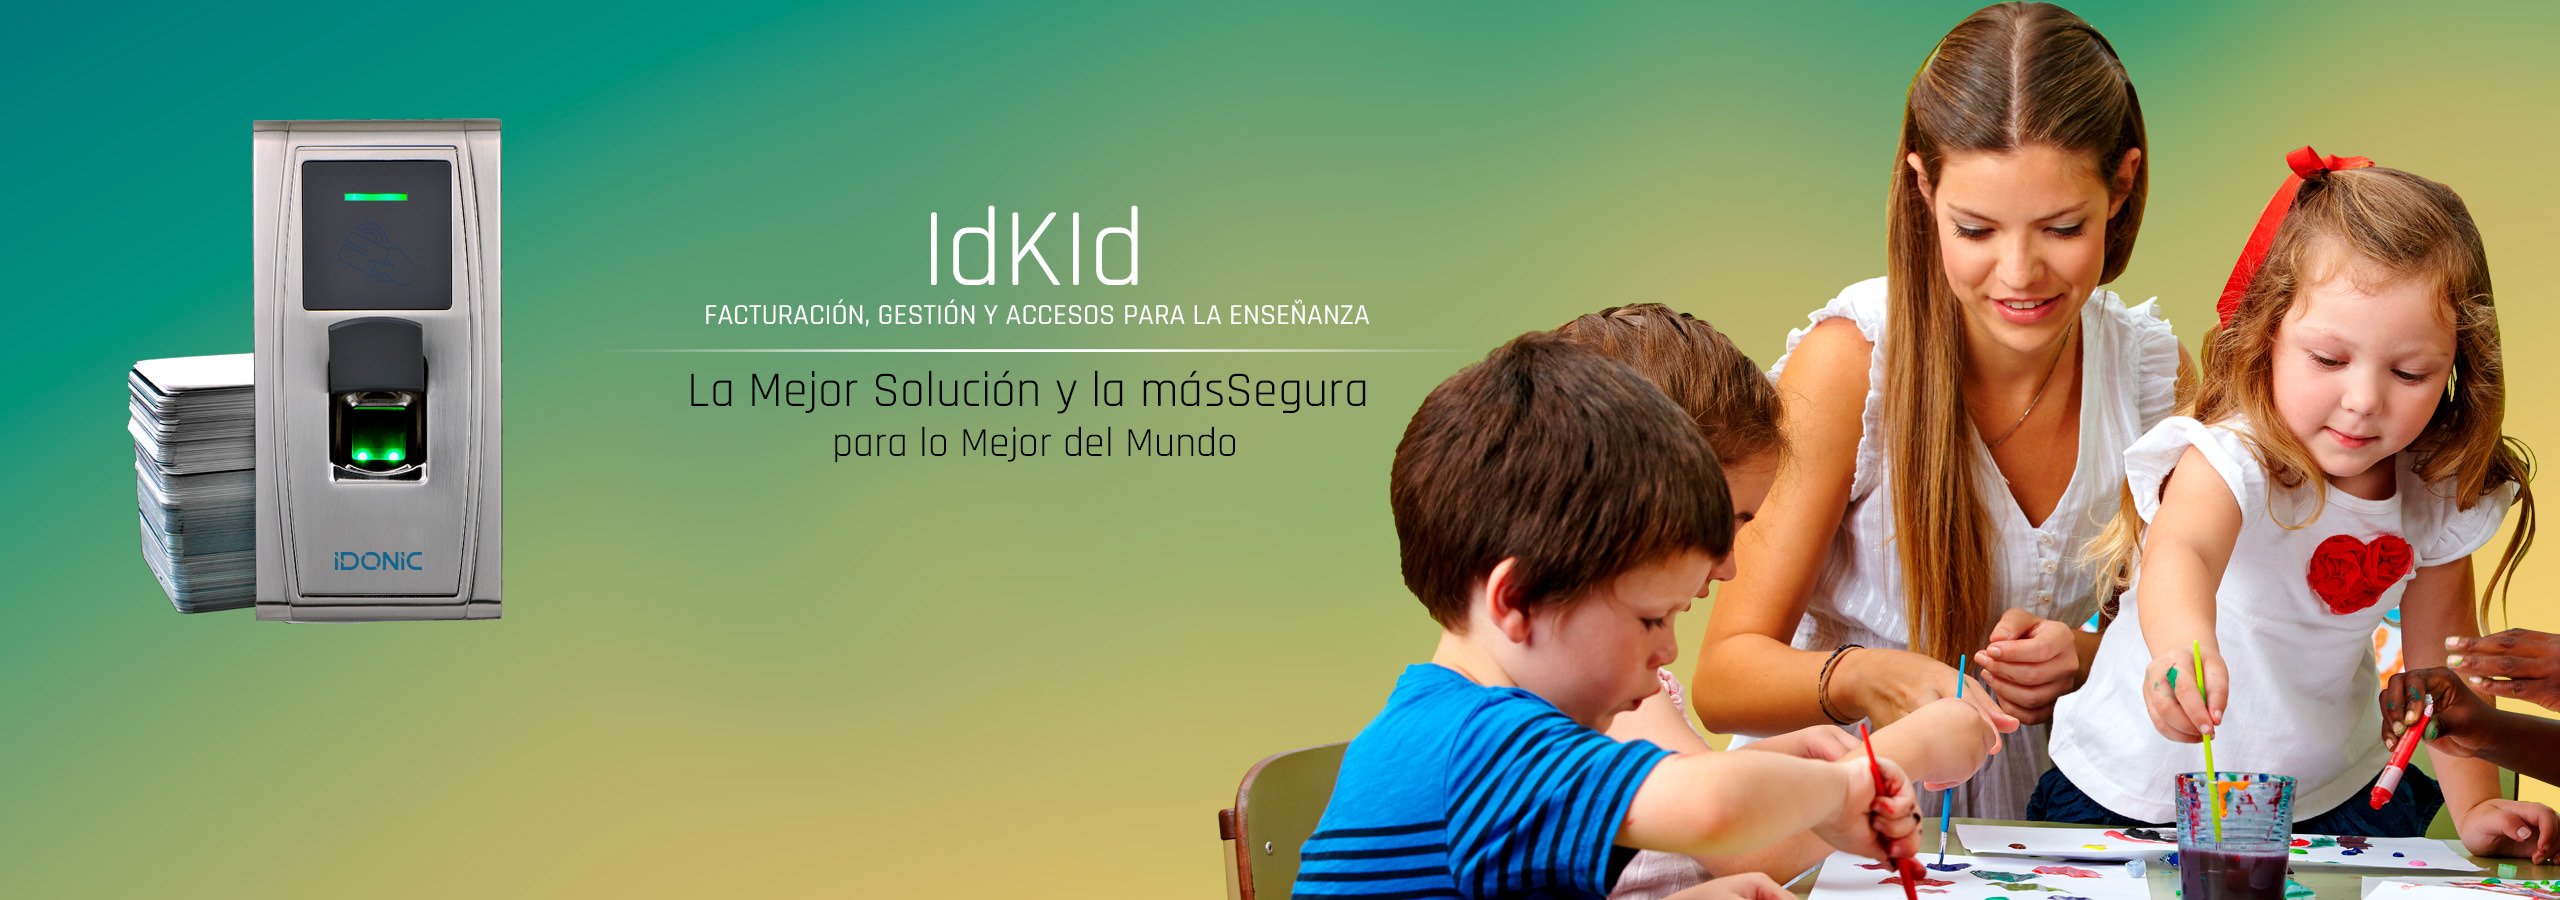 Destaque-Homepage-IdKid-ES